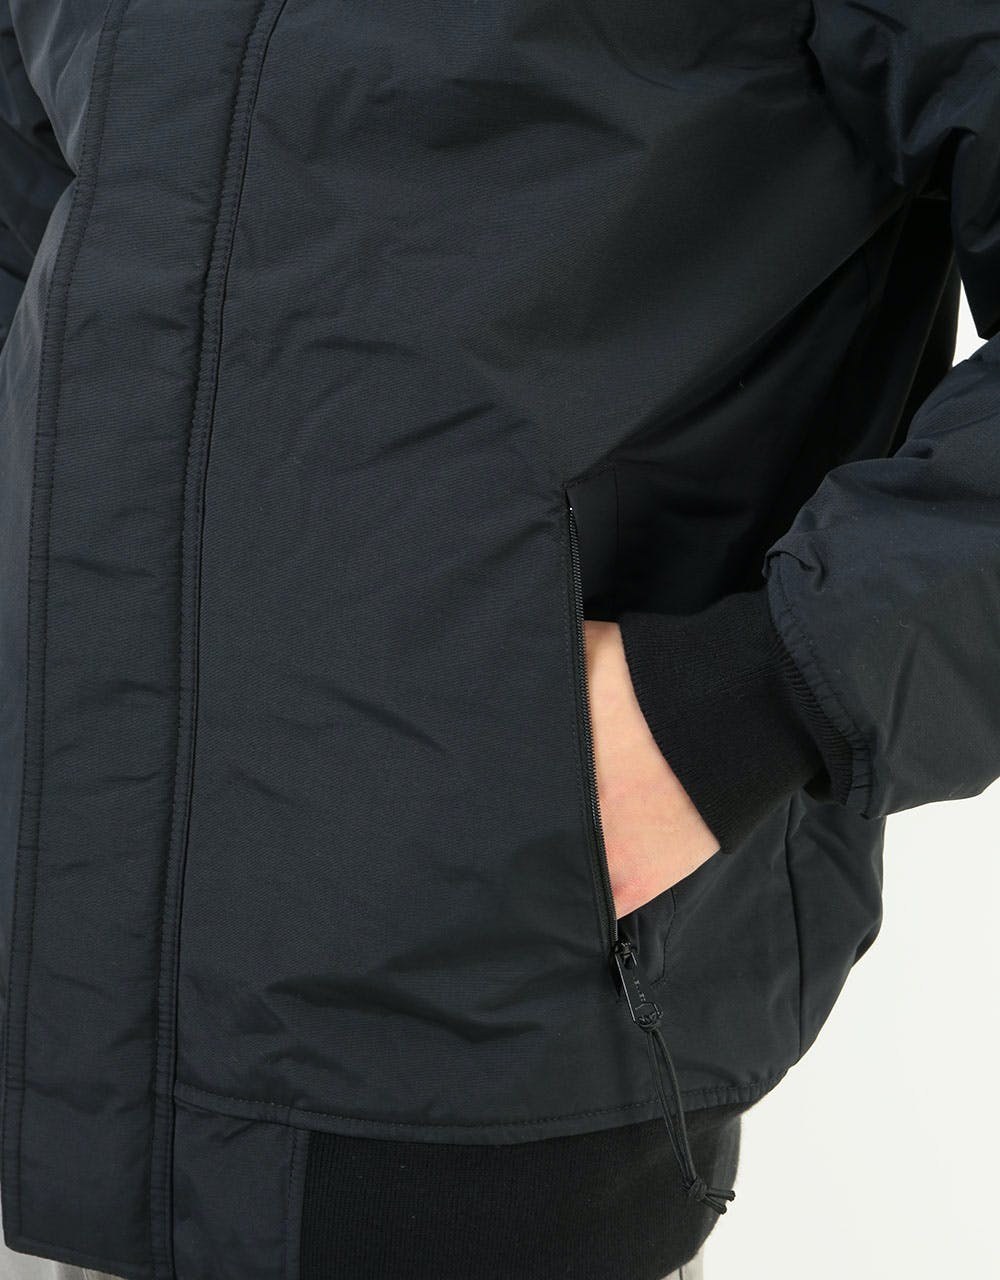 Carhartt WIP Kodiak Blouson Jacket - Black/Black